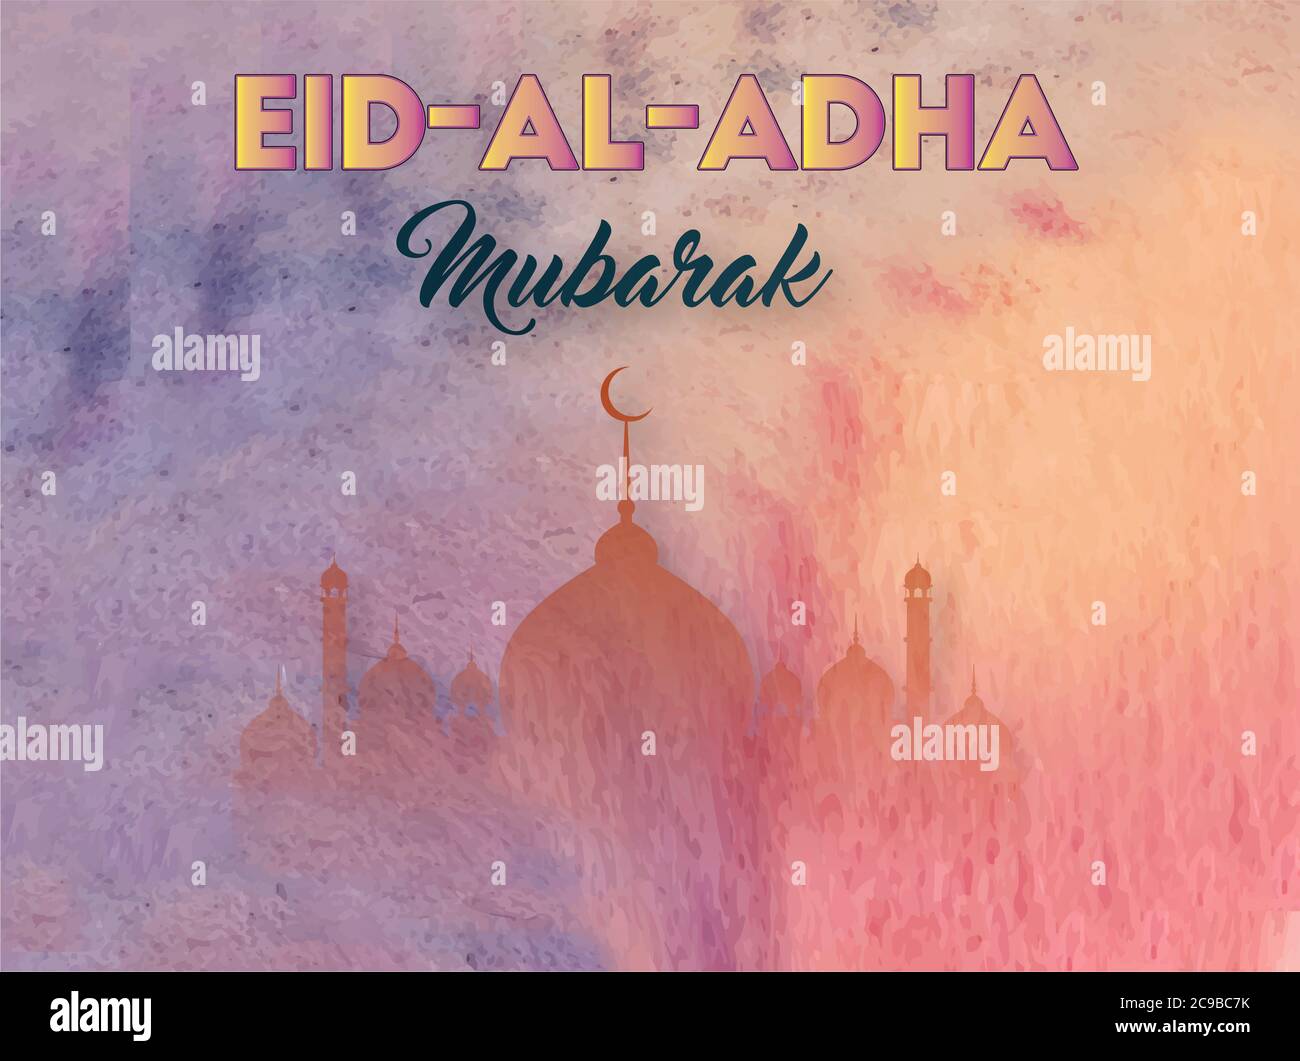 Elegant Font Decorative Eid al Adha Mubarak. Eid Al Adha mubarak background design. Stock Photo